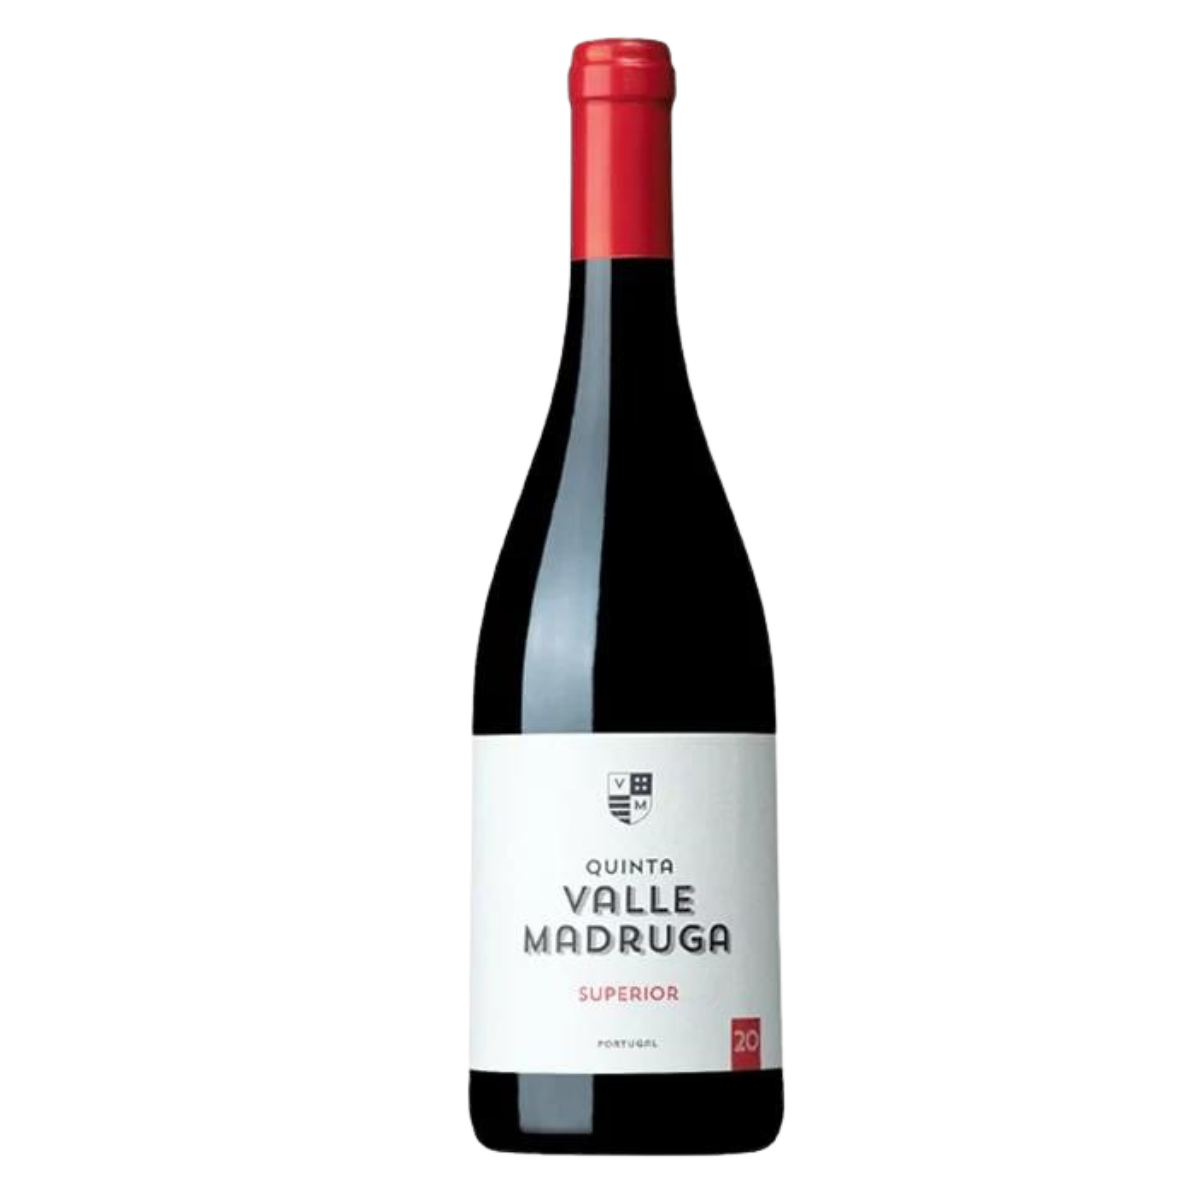 Quinta Valle Madruga Vinho Tinto Superior 2020